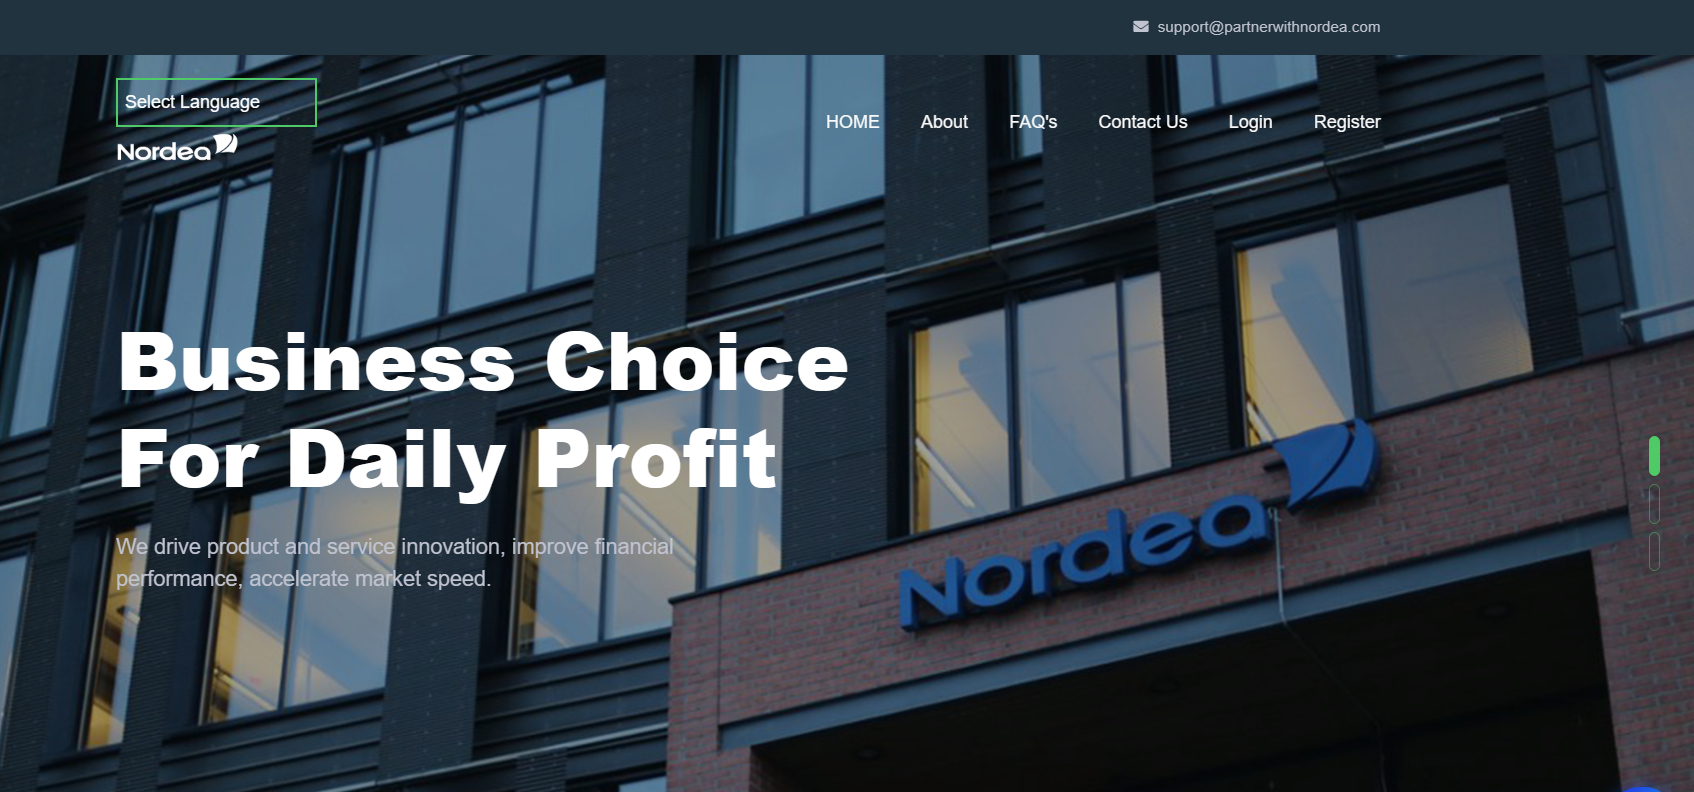 Homepage of Nordea Partners